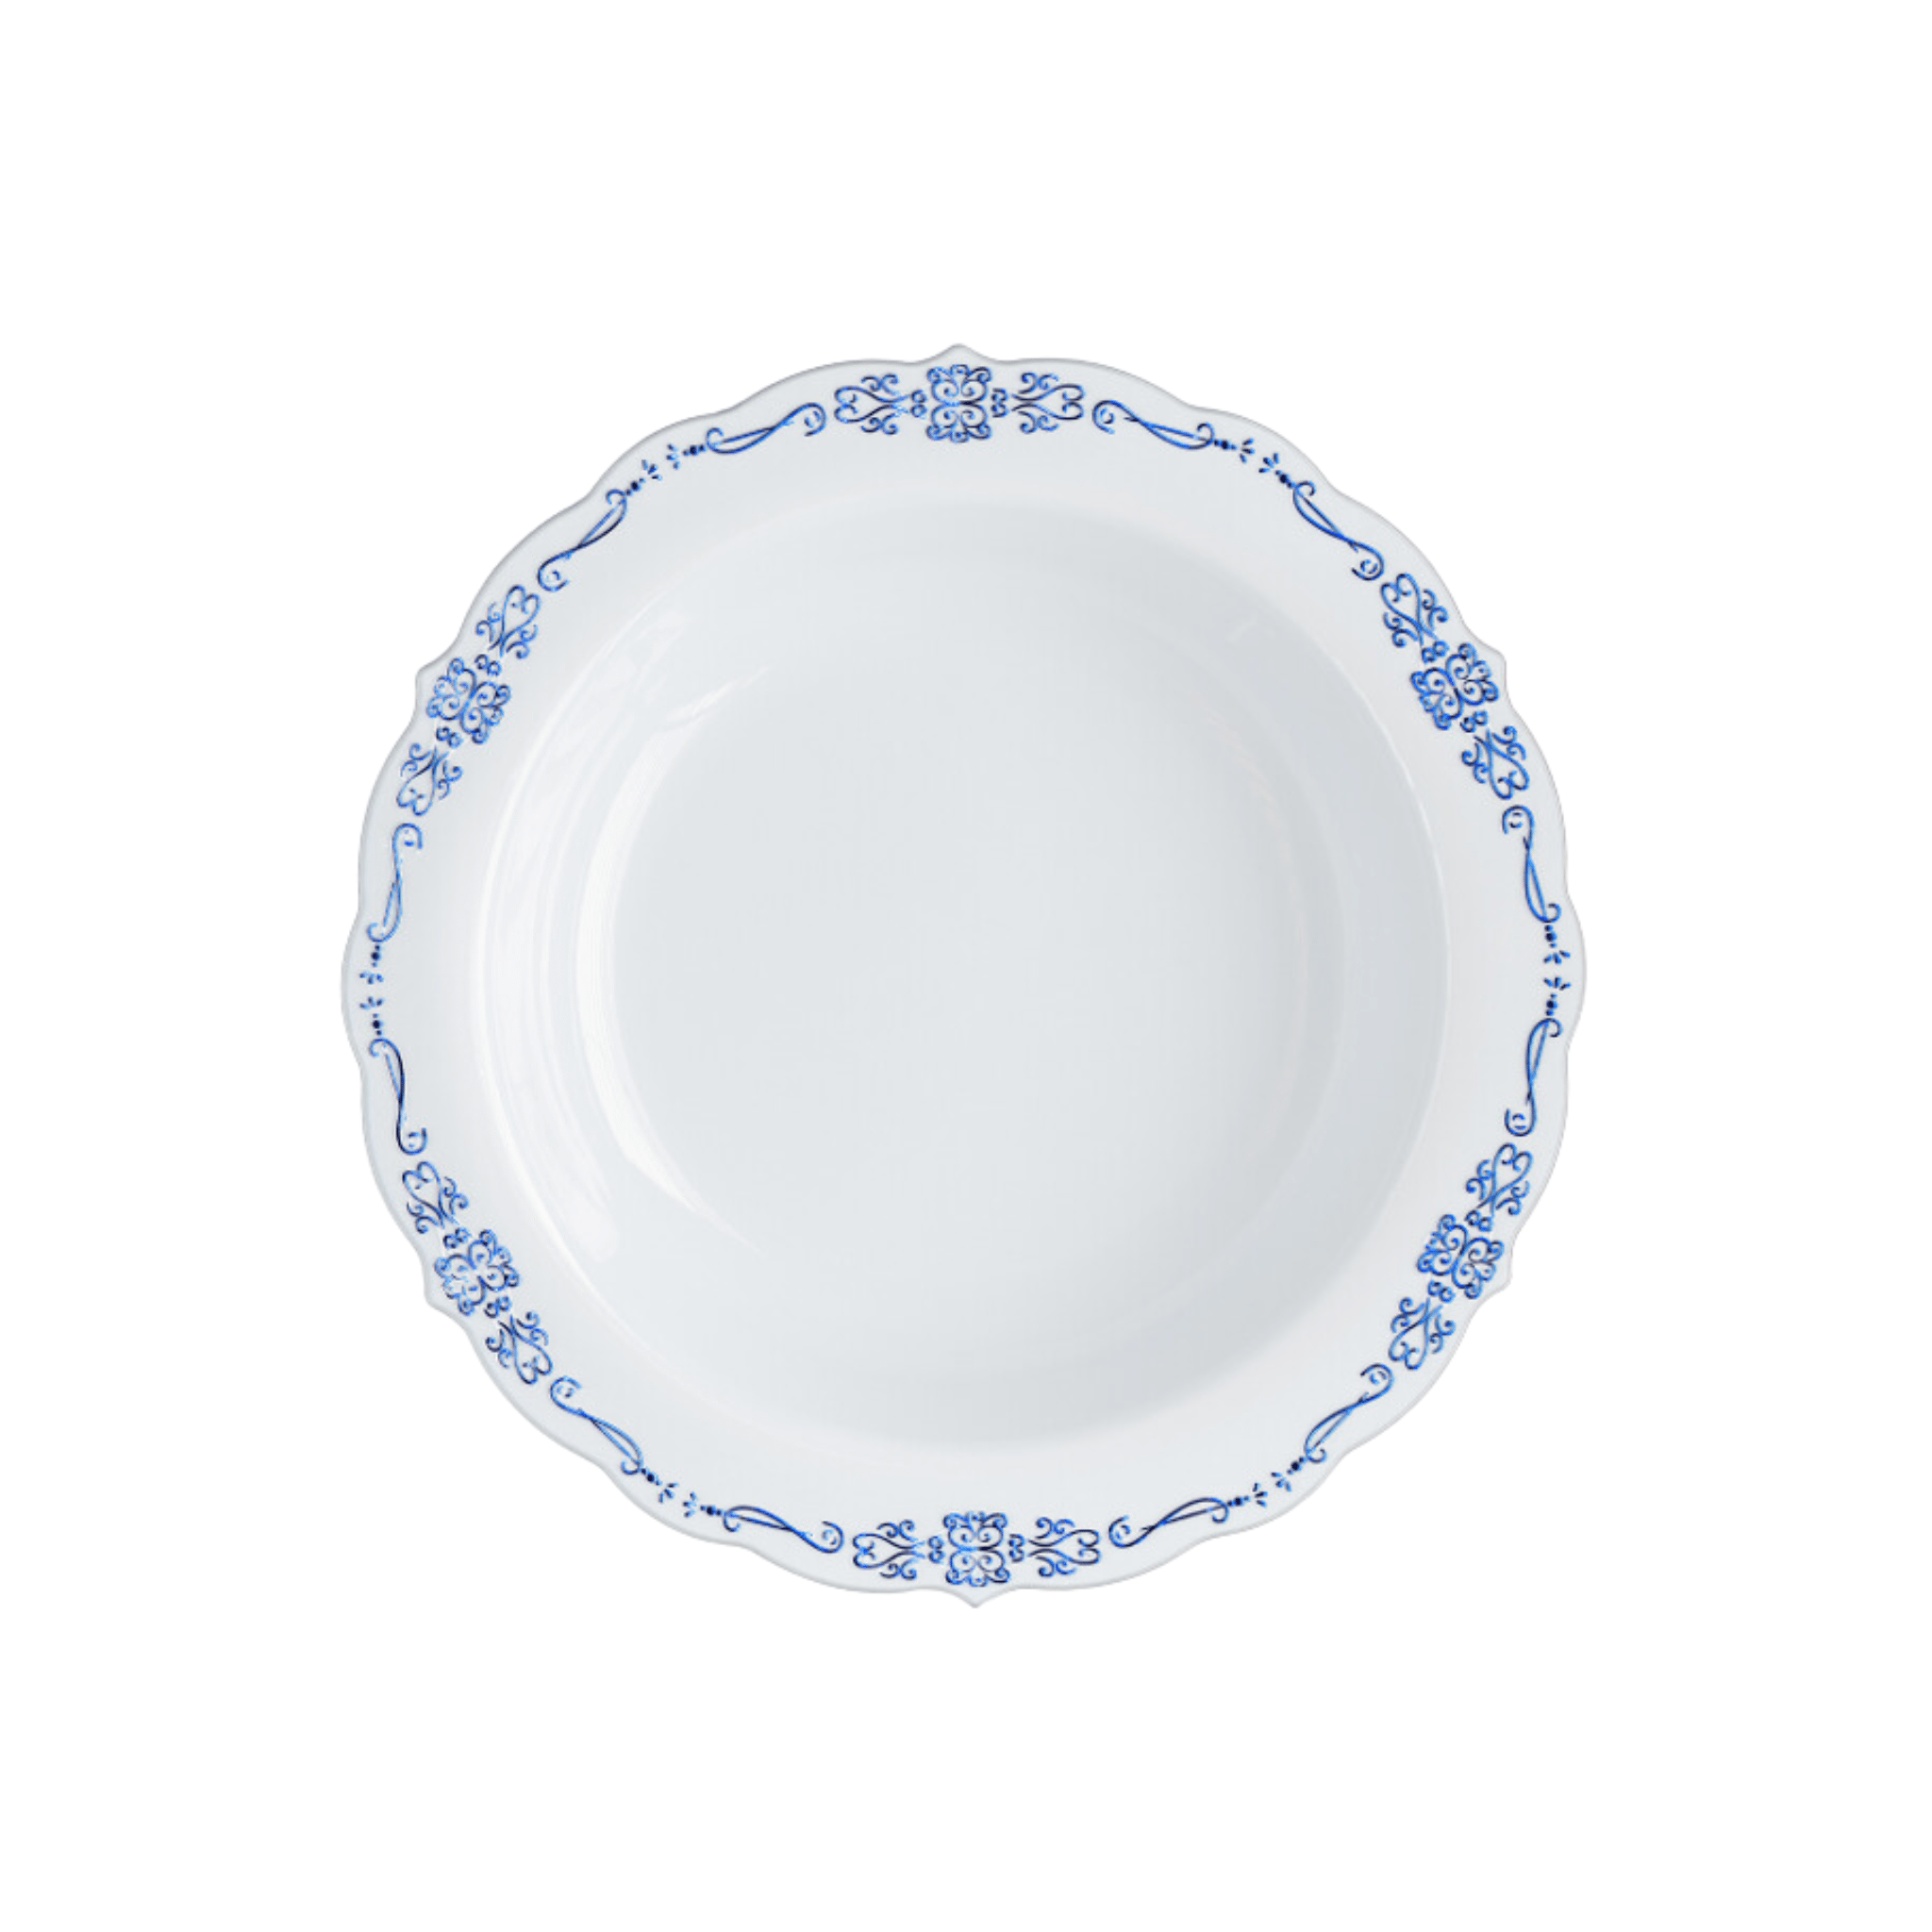 12 oz. White / Navy Victorian Design Plastic Bowls (120 Count)